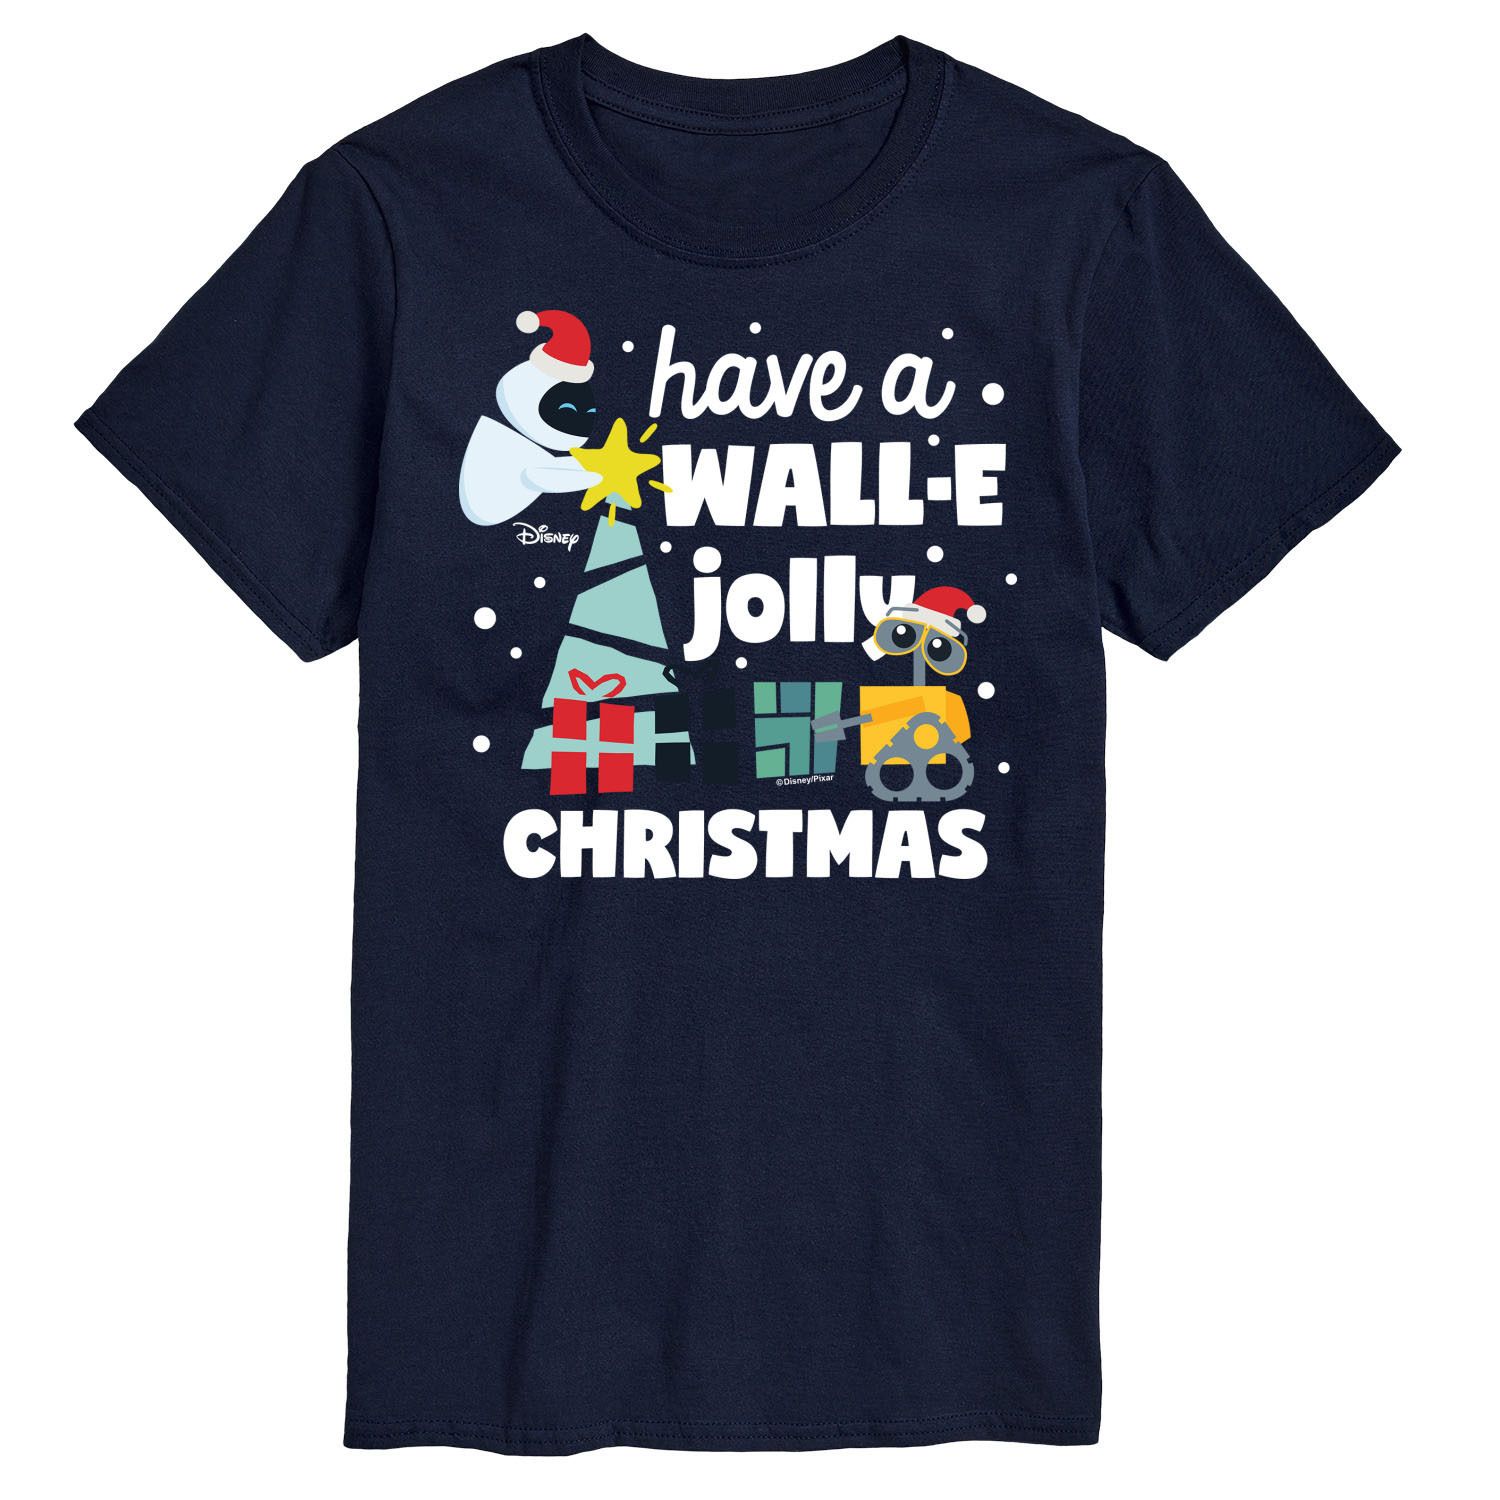 hissey jane jolly tall Футболка's Wall-E Big & Tall Jolly Christmas с рисунком Disney, синий